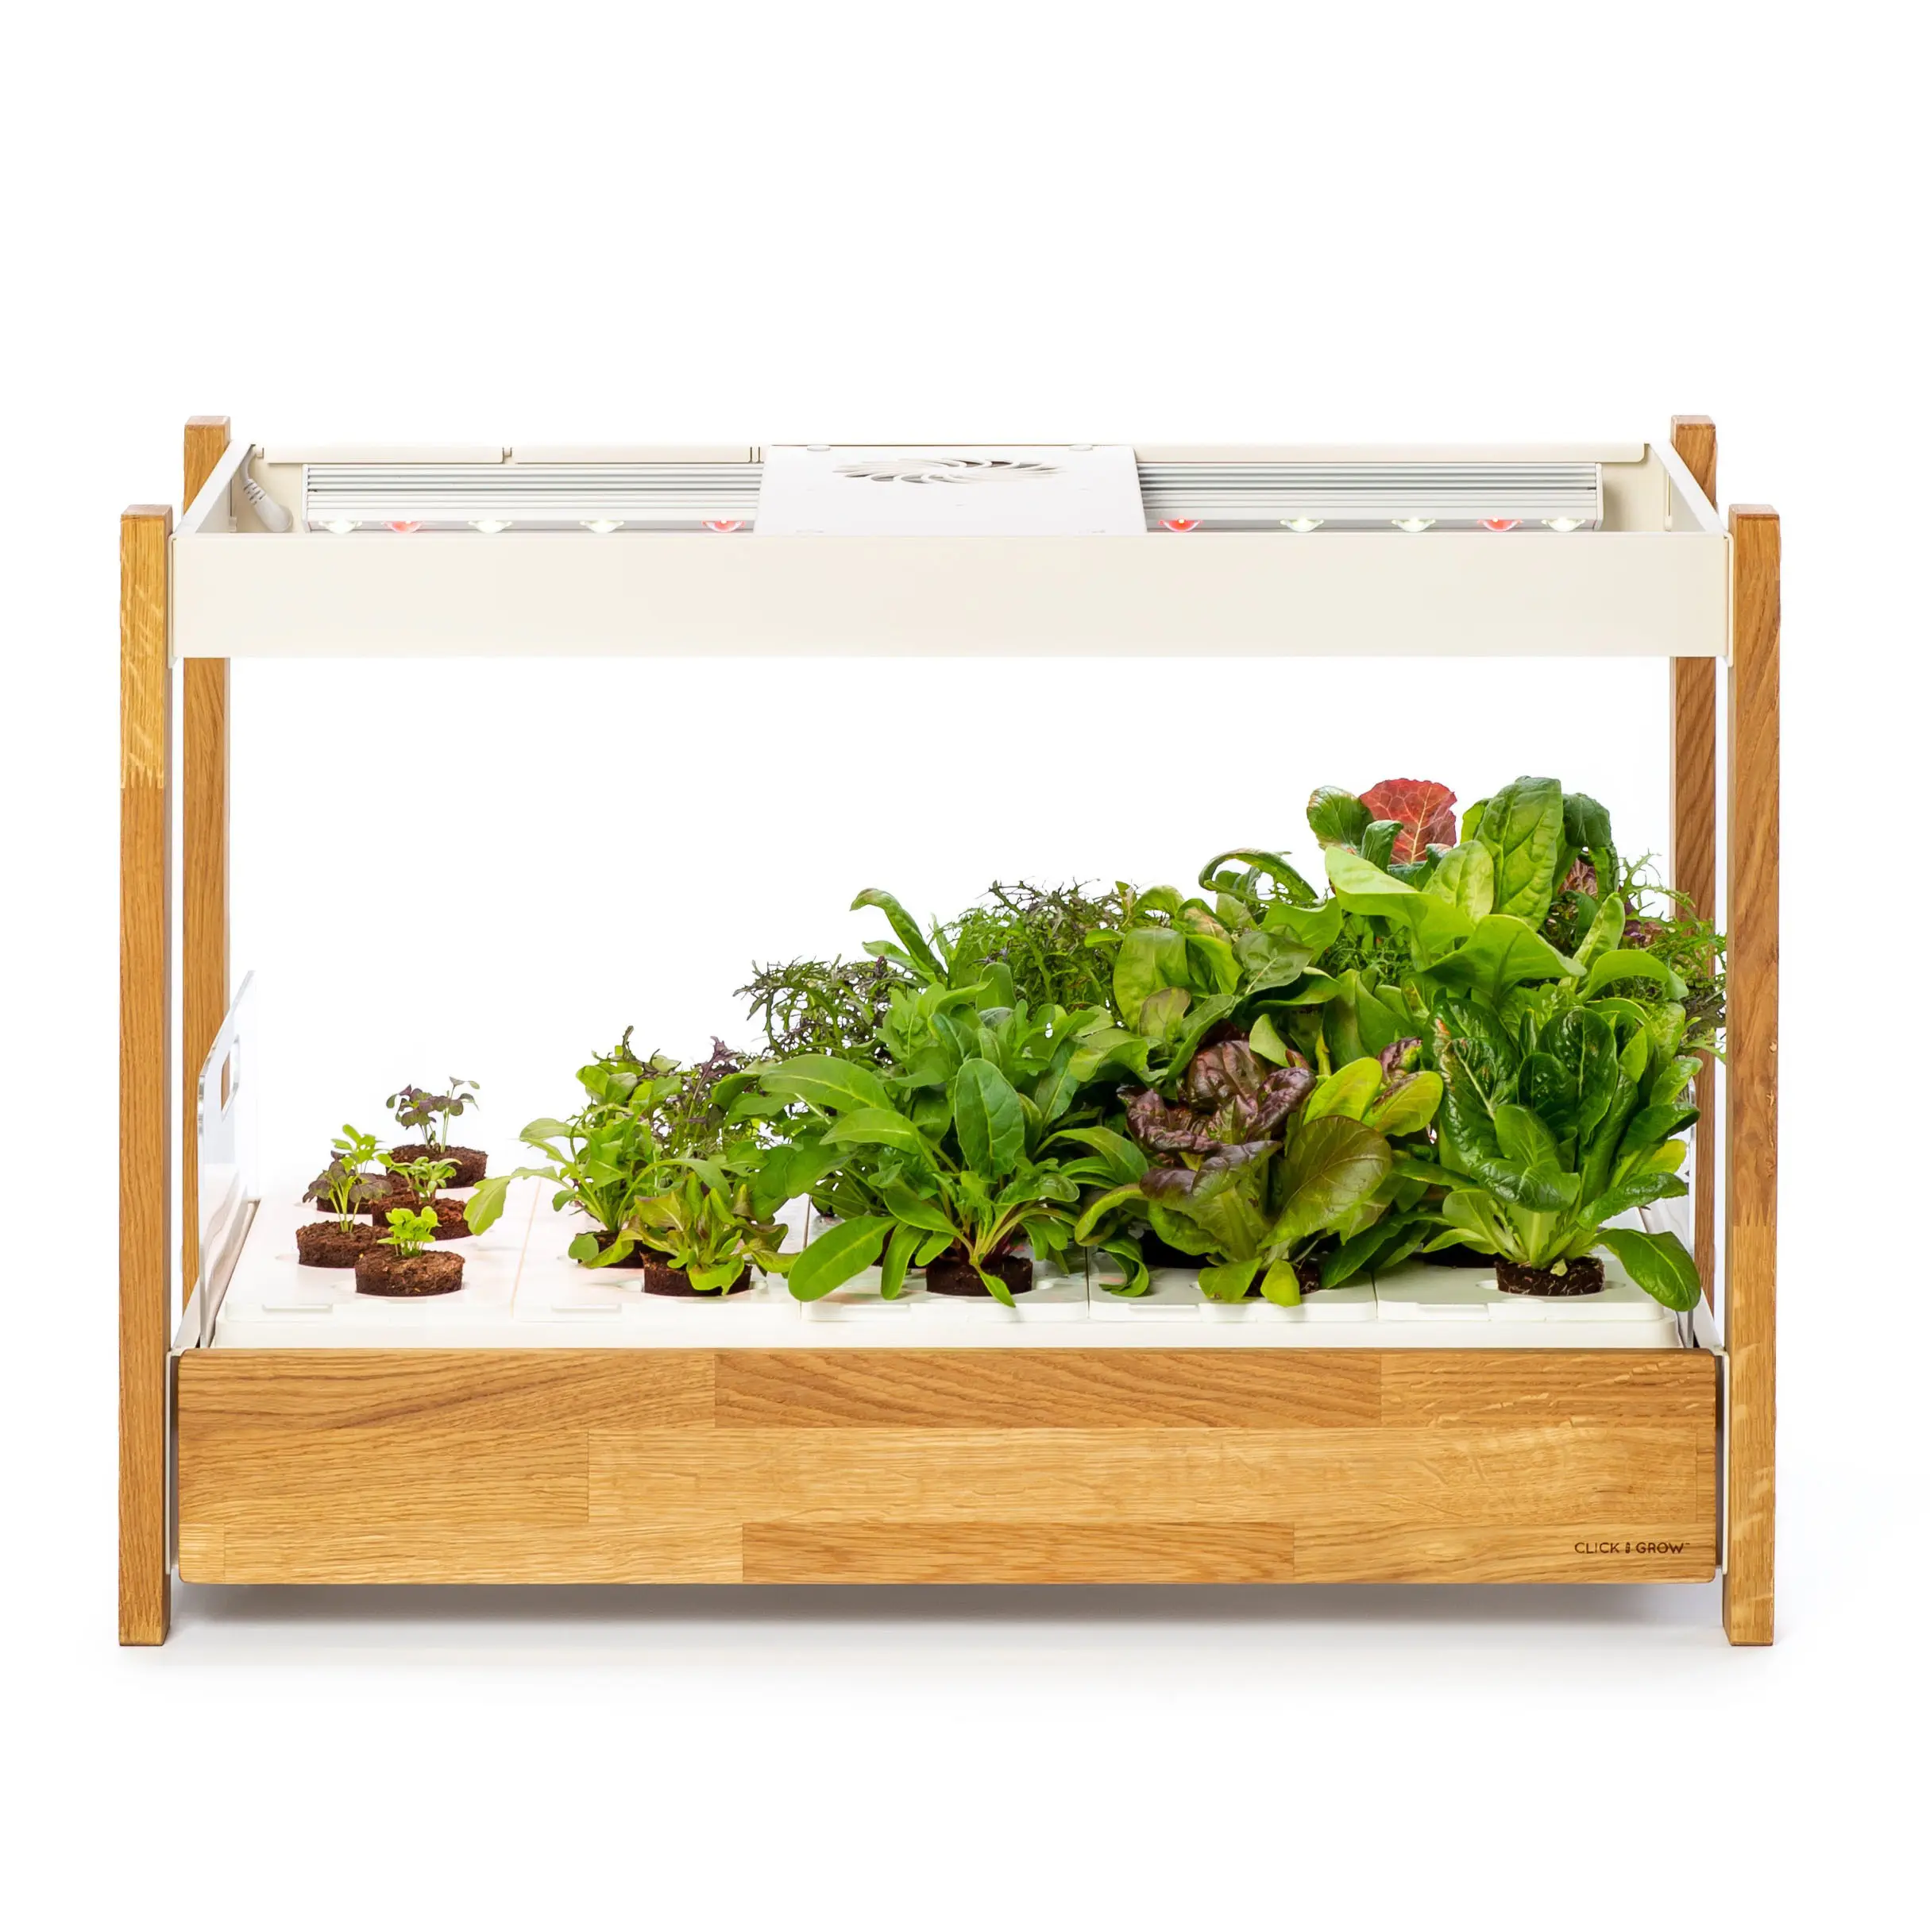 Il Click & Grow 10x20 microgreen tray vertical hydroponic garden smart growing System aerogarden hydroponics indoor kit